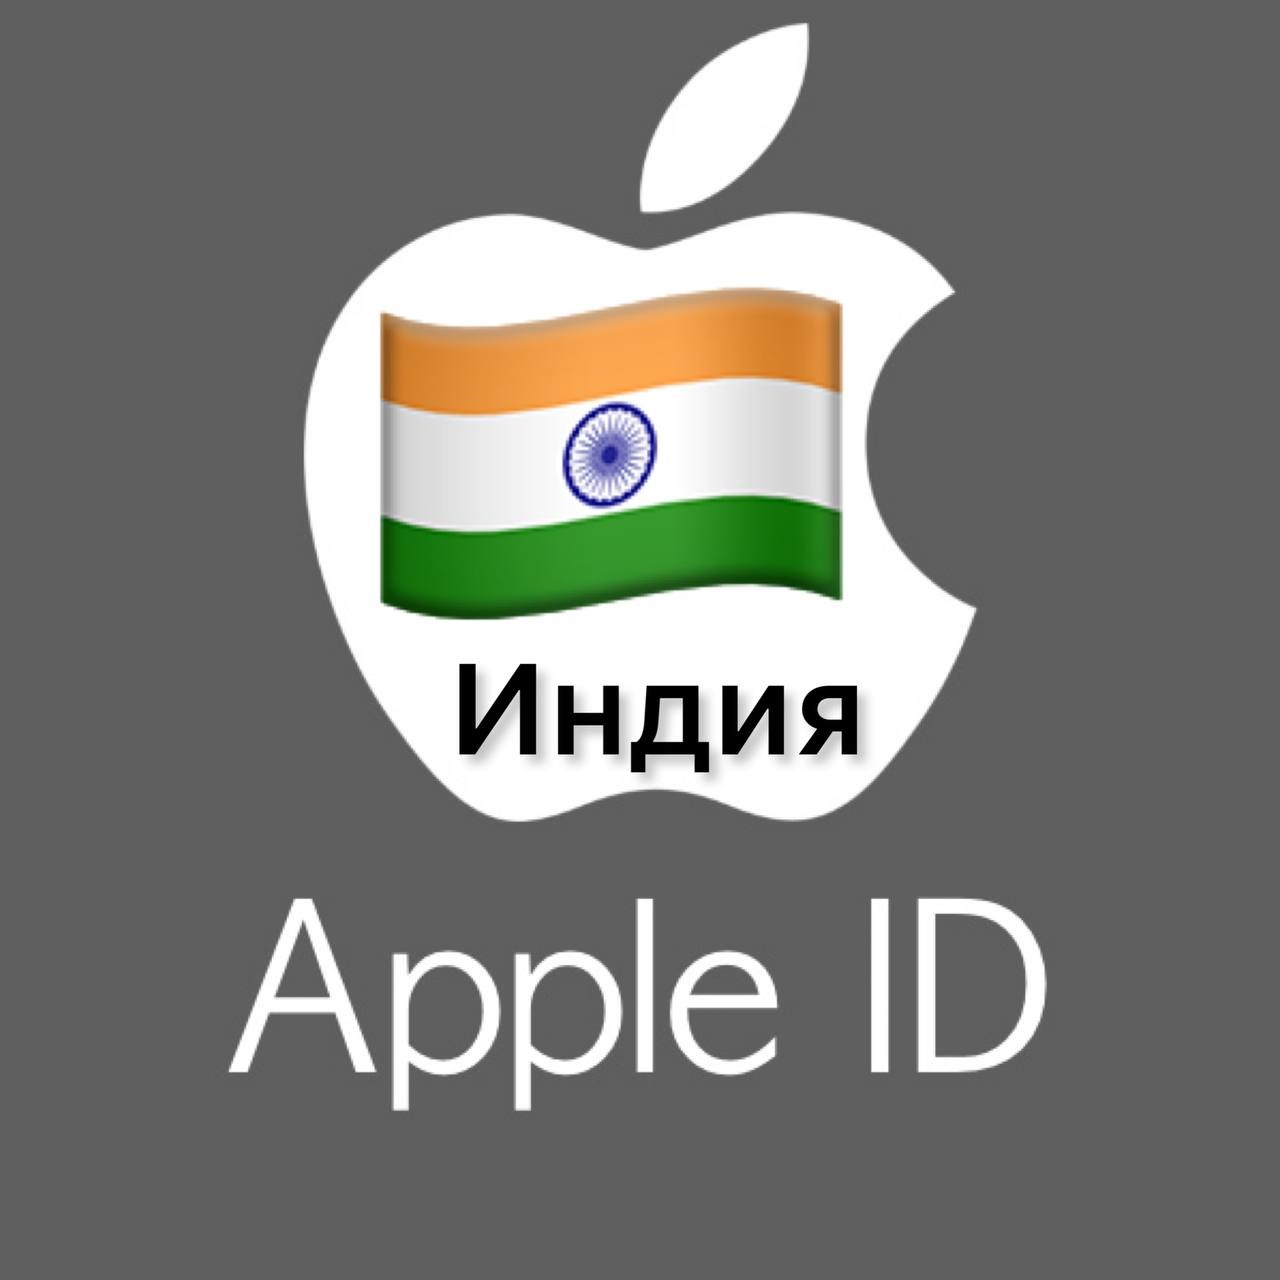 🍏 Apple ID аккаунт ИНДИЯ iPhone ios iPad Appstore 🎁